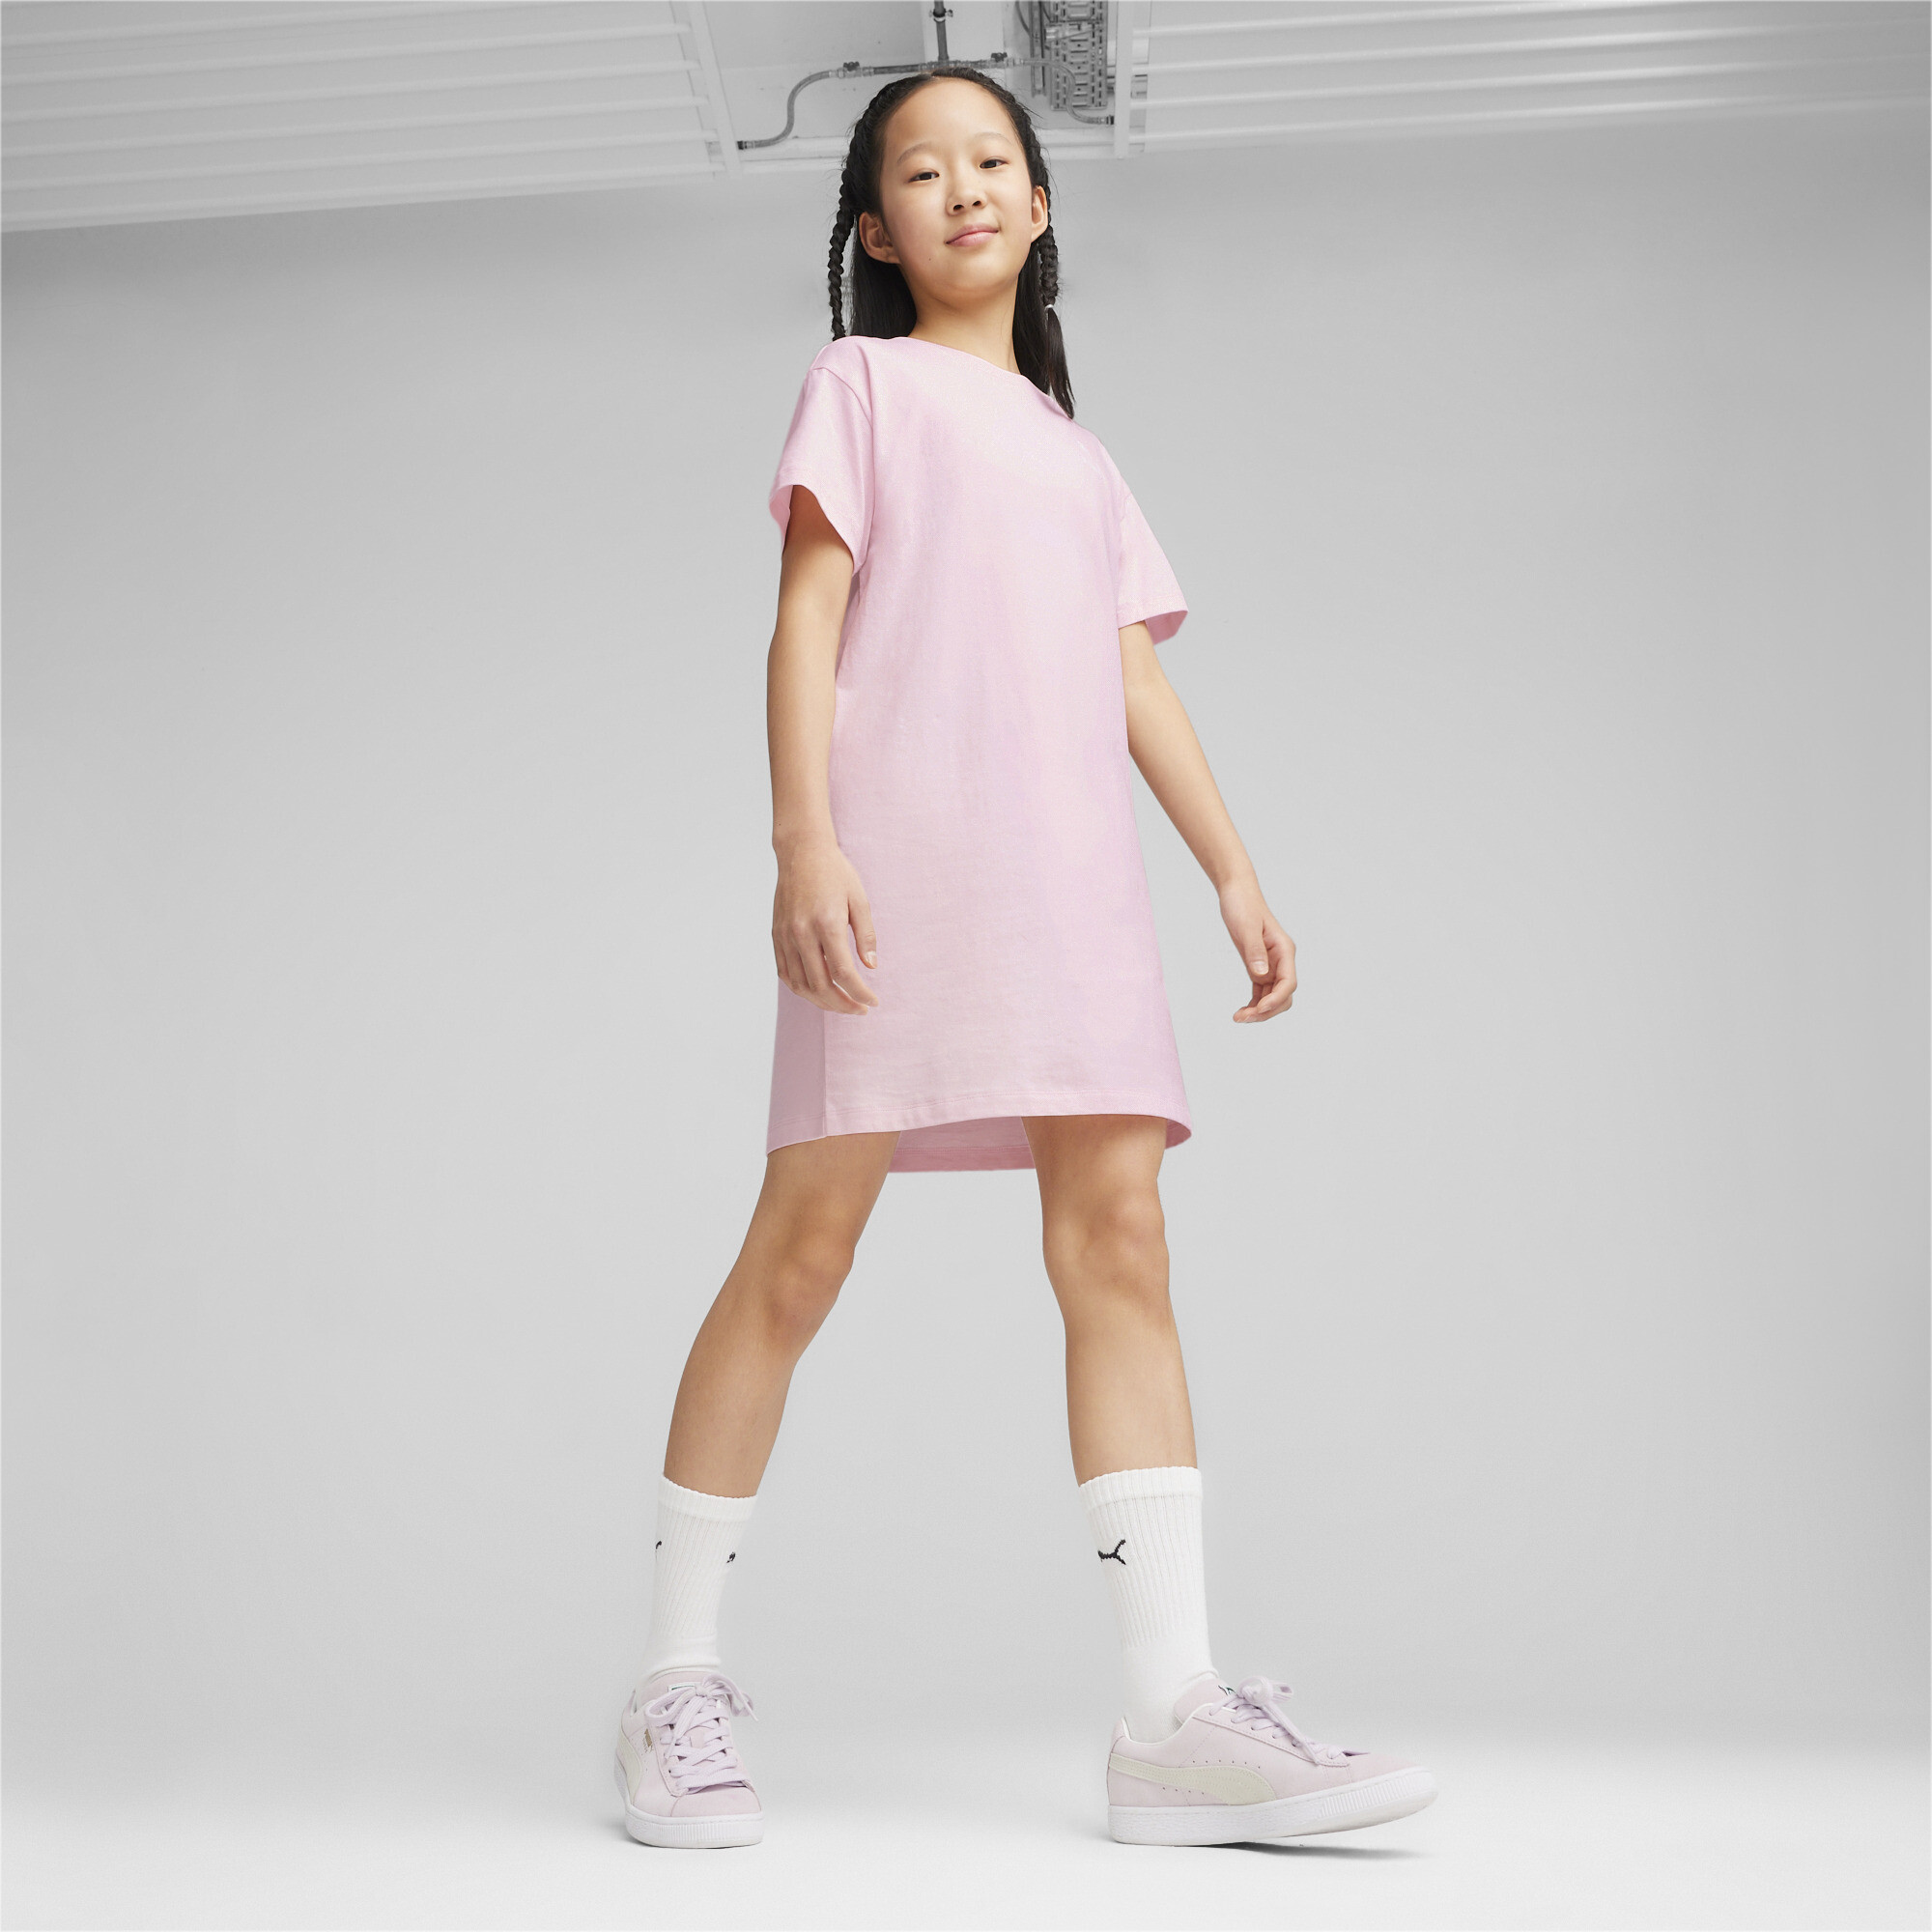 Puma BETTER CLASSICS Girl's Tee Dress, Pink, Size 7-8Y, Shop